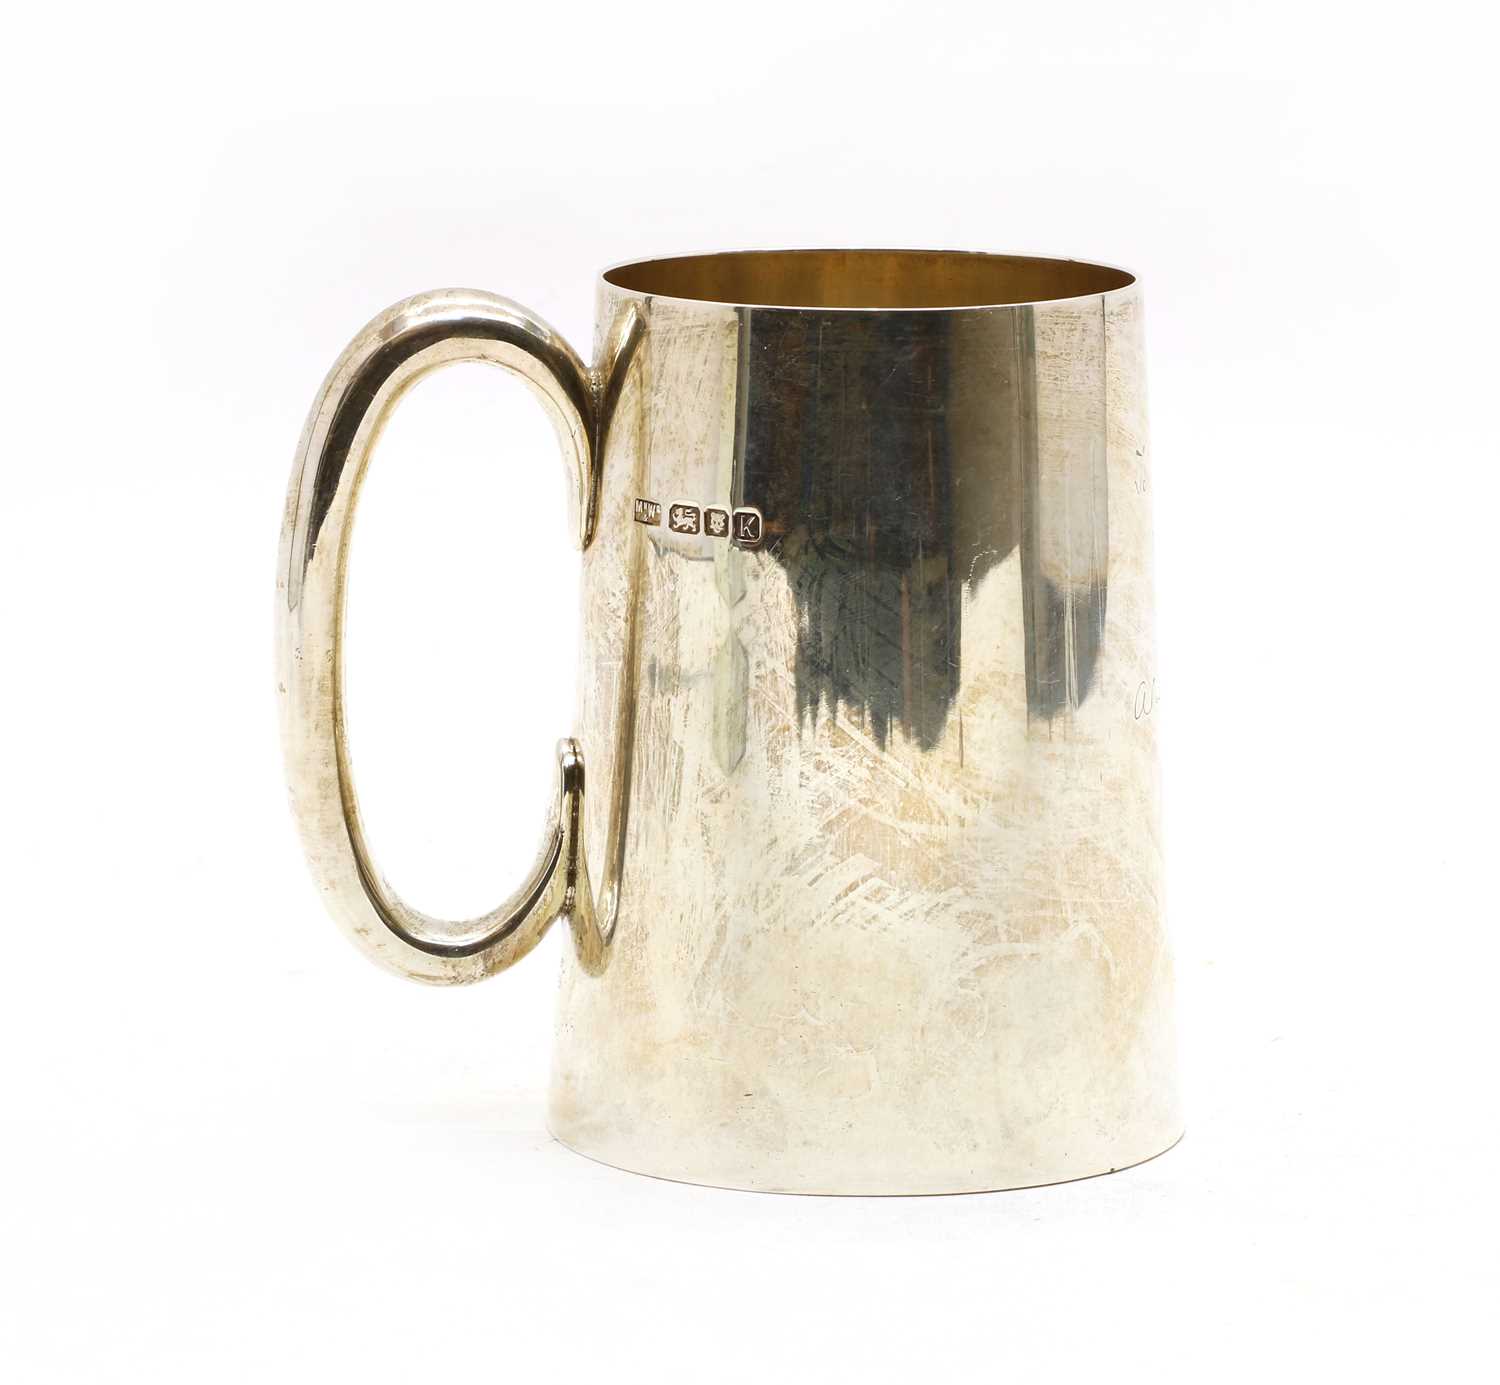 Lot 2 - A modern silver beer mug by Mappin & Webb